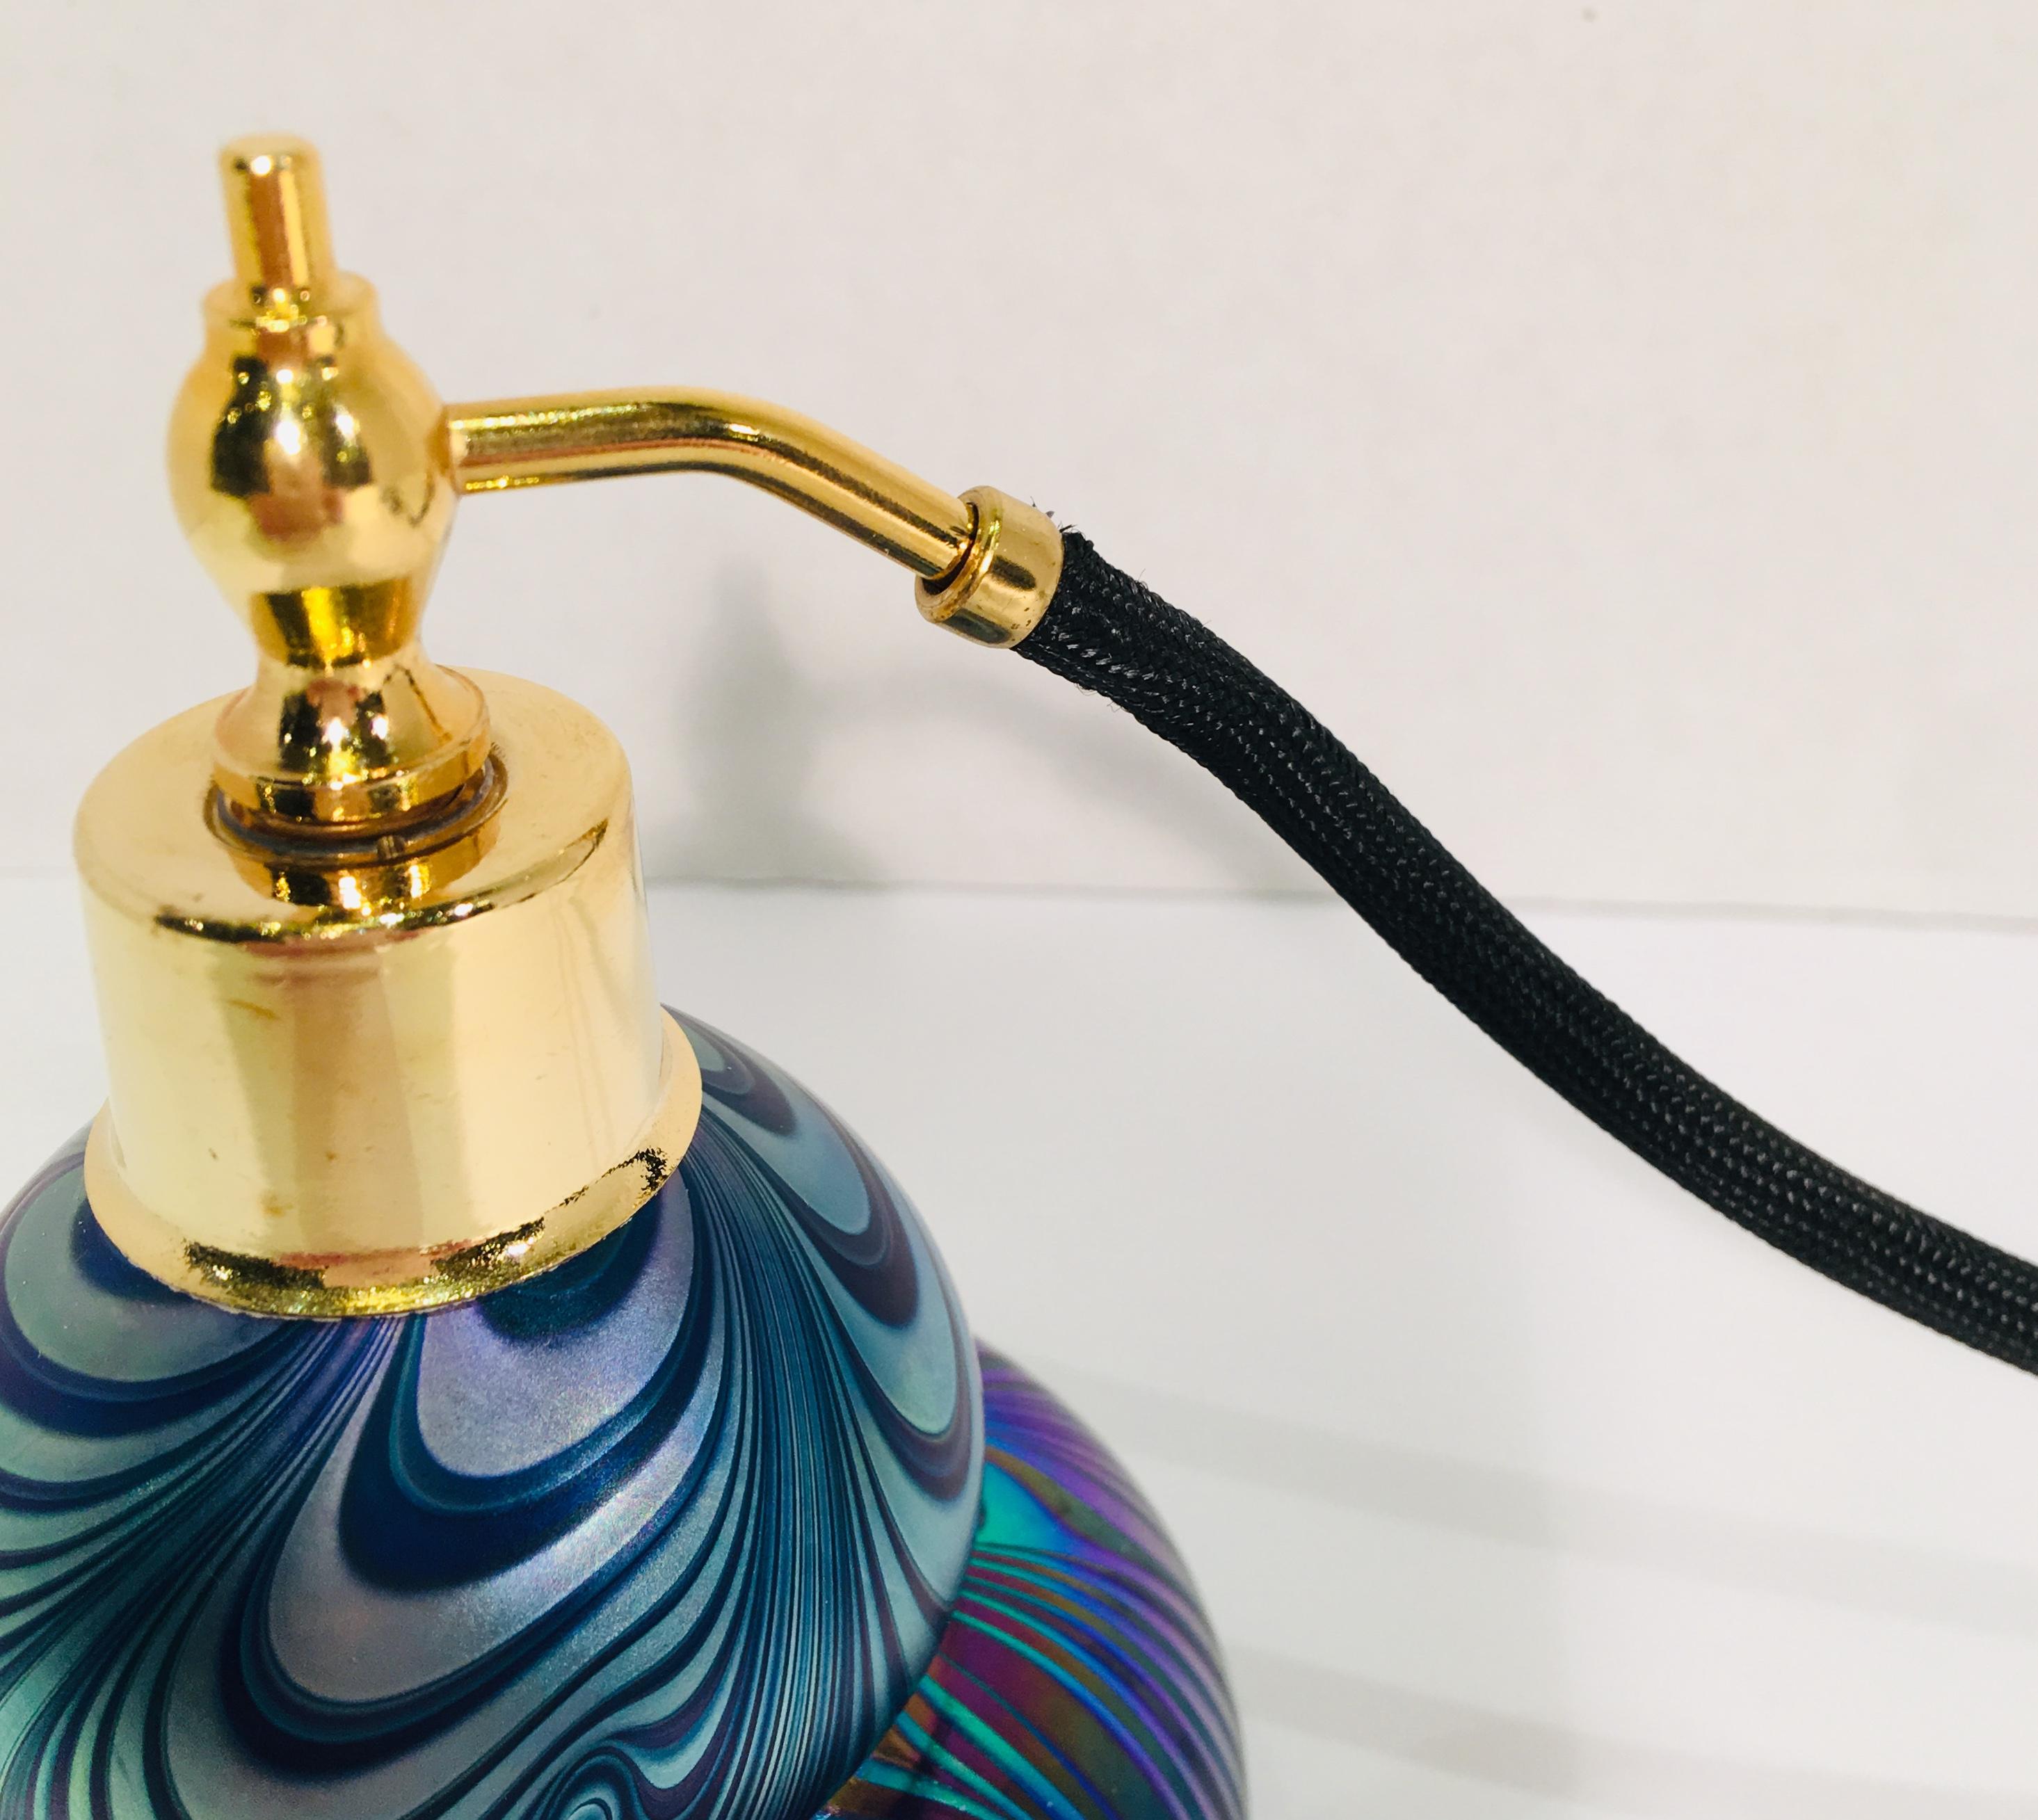 Late 20th Century Handmade Austrian Art Glass Perfume Bottle Atomizer Signed Oskar Karla from 1986 For Sale